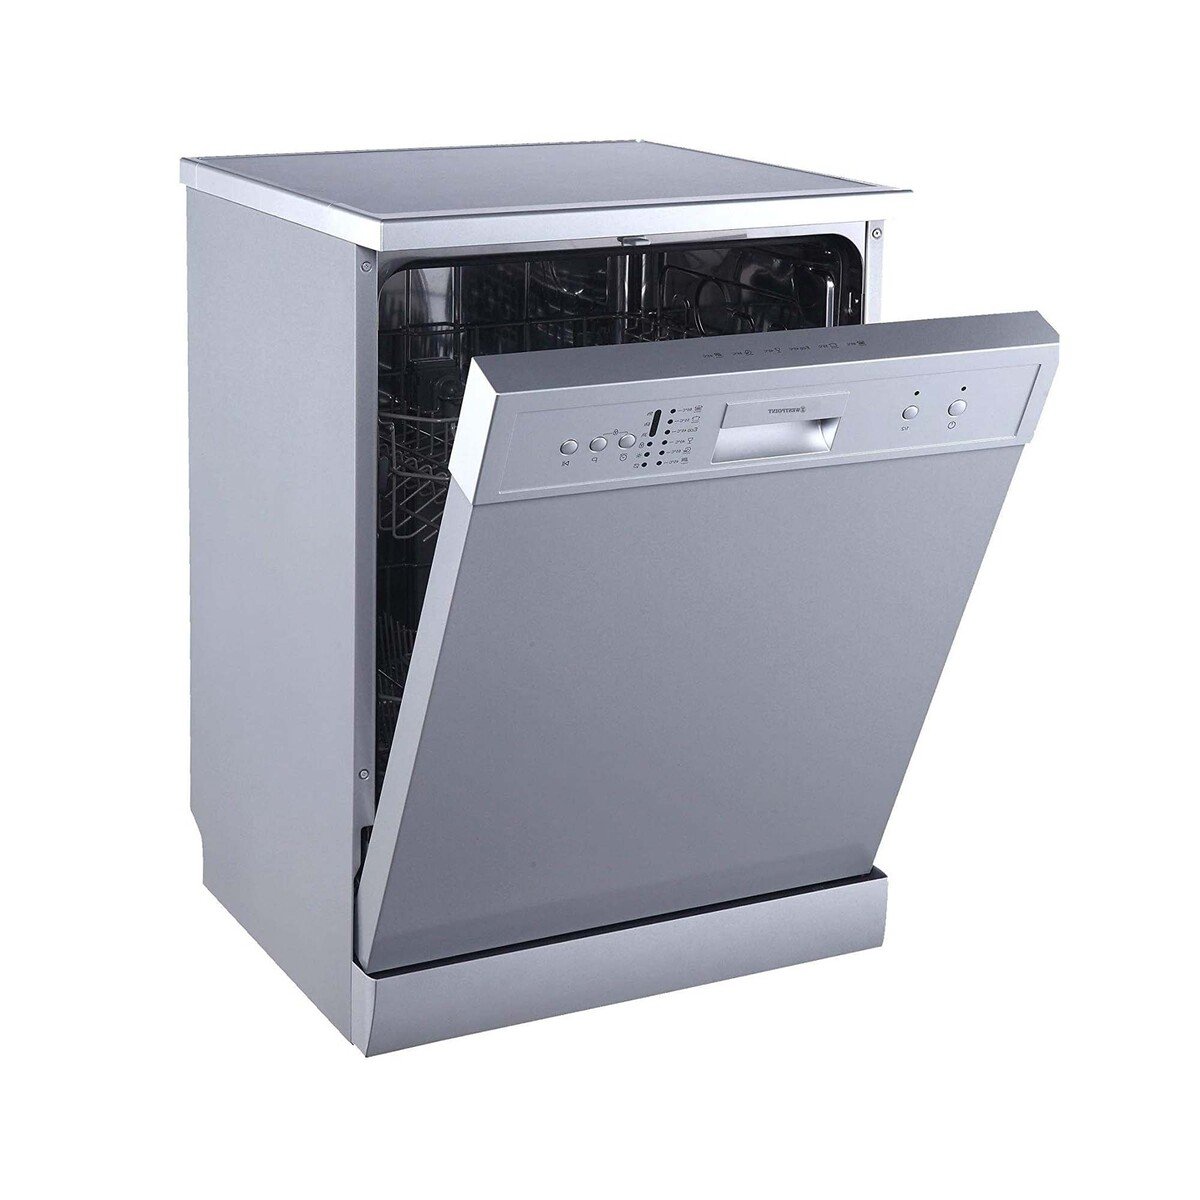 Westpoint Dishwasher WYM-14616ERDI 6programs